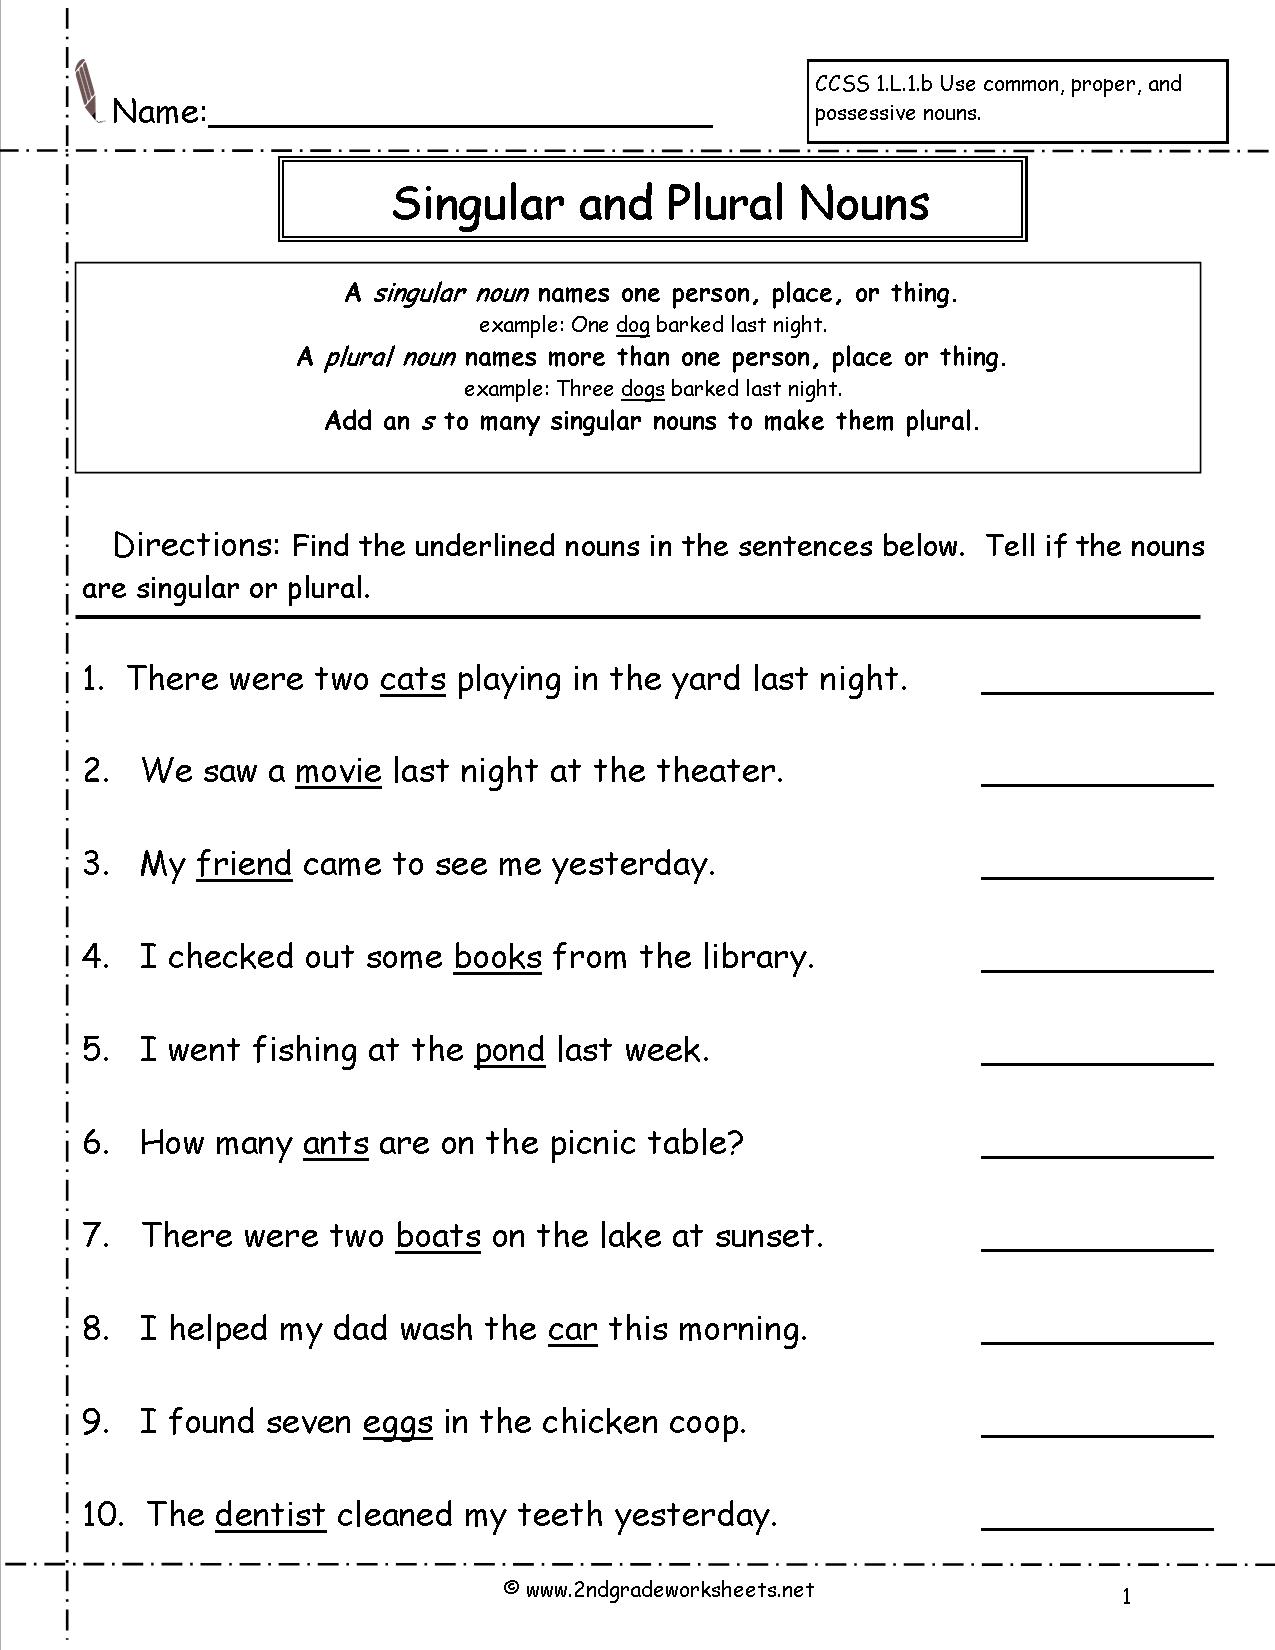 15 Best Images Of Possessive Pronouns Worksheets Printable Personal Pronouns Worksheet